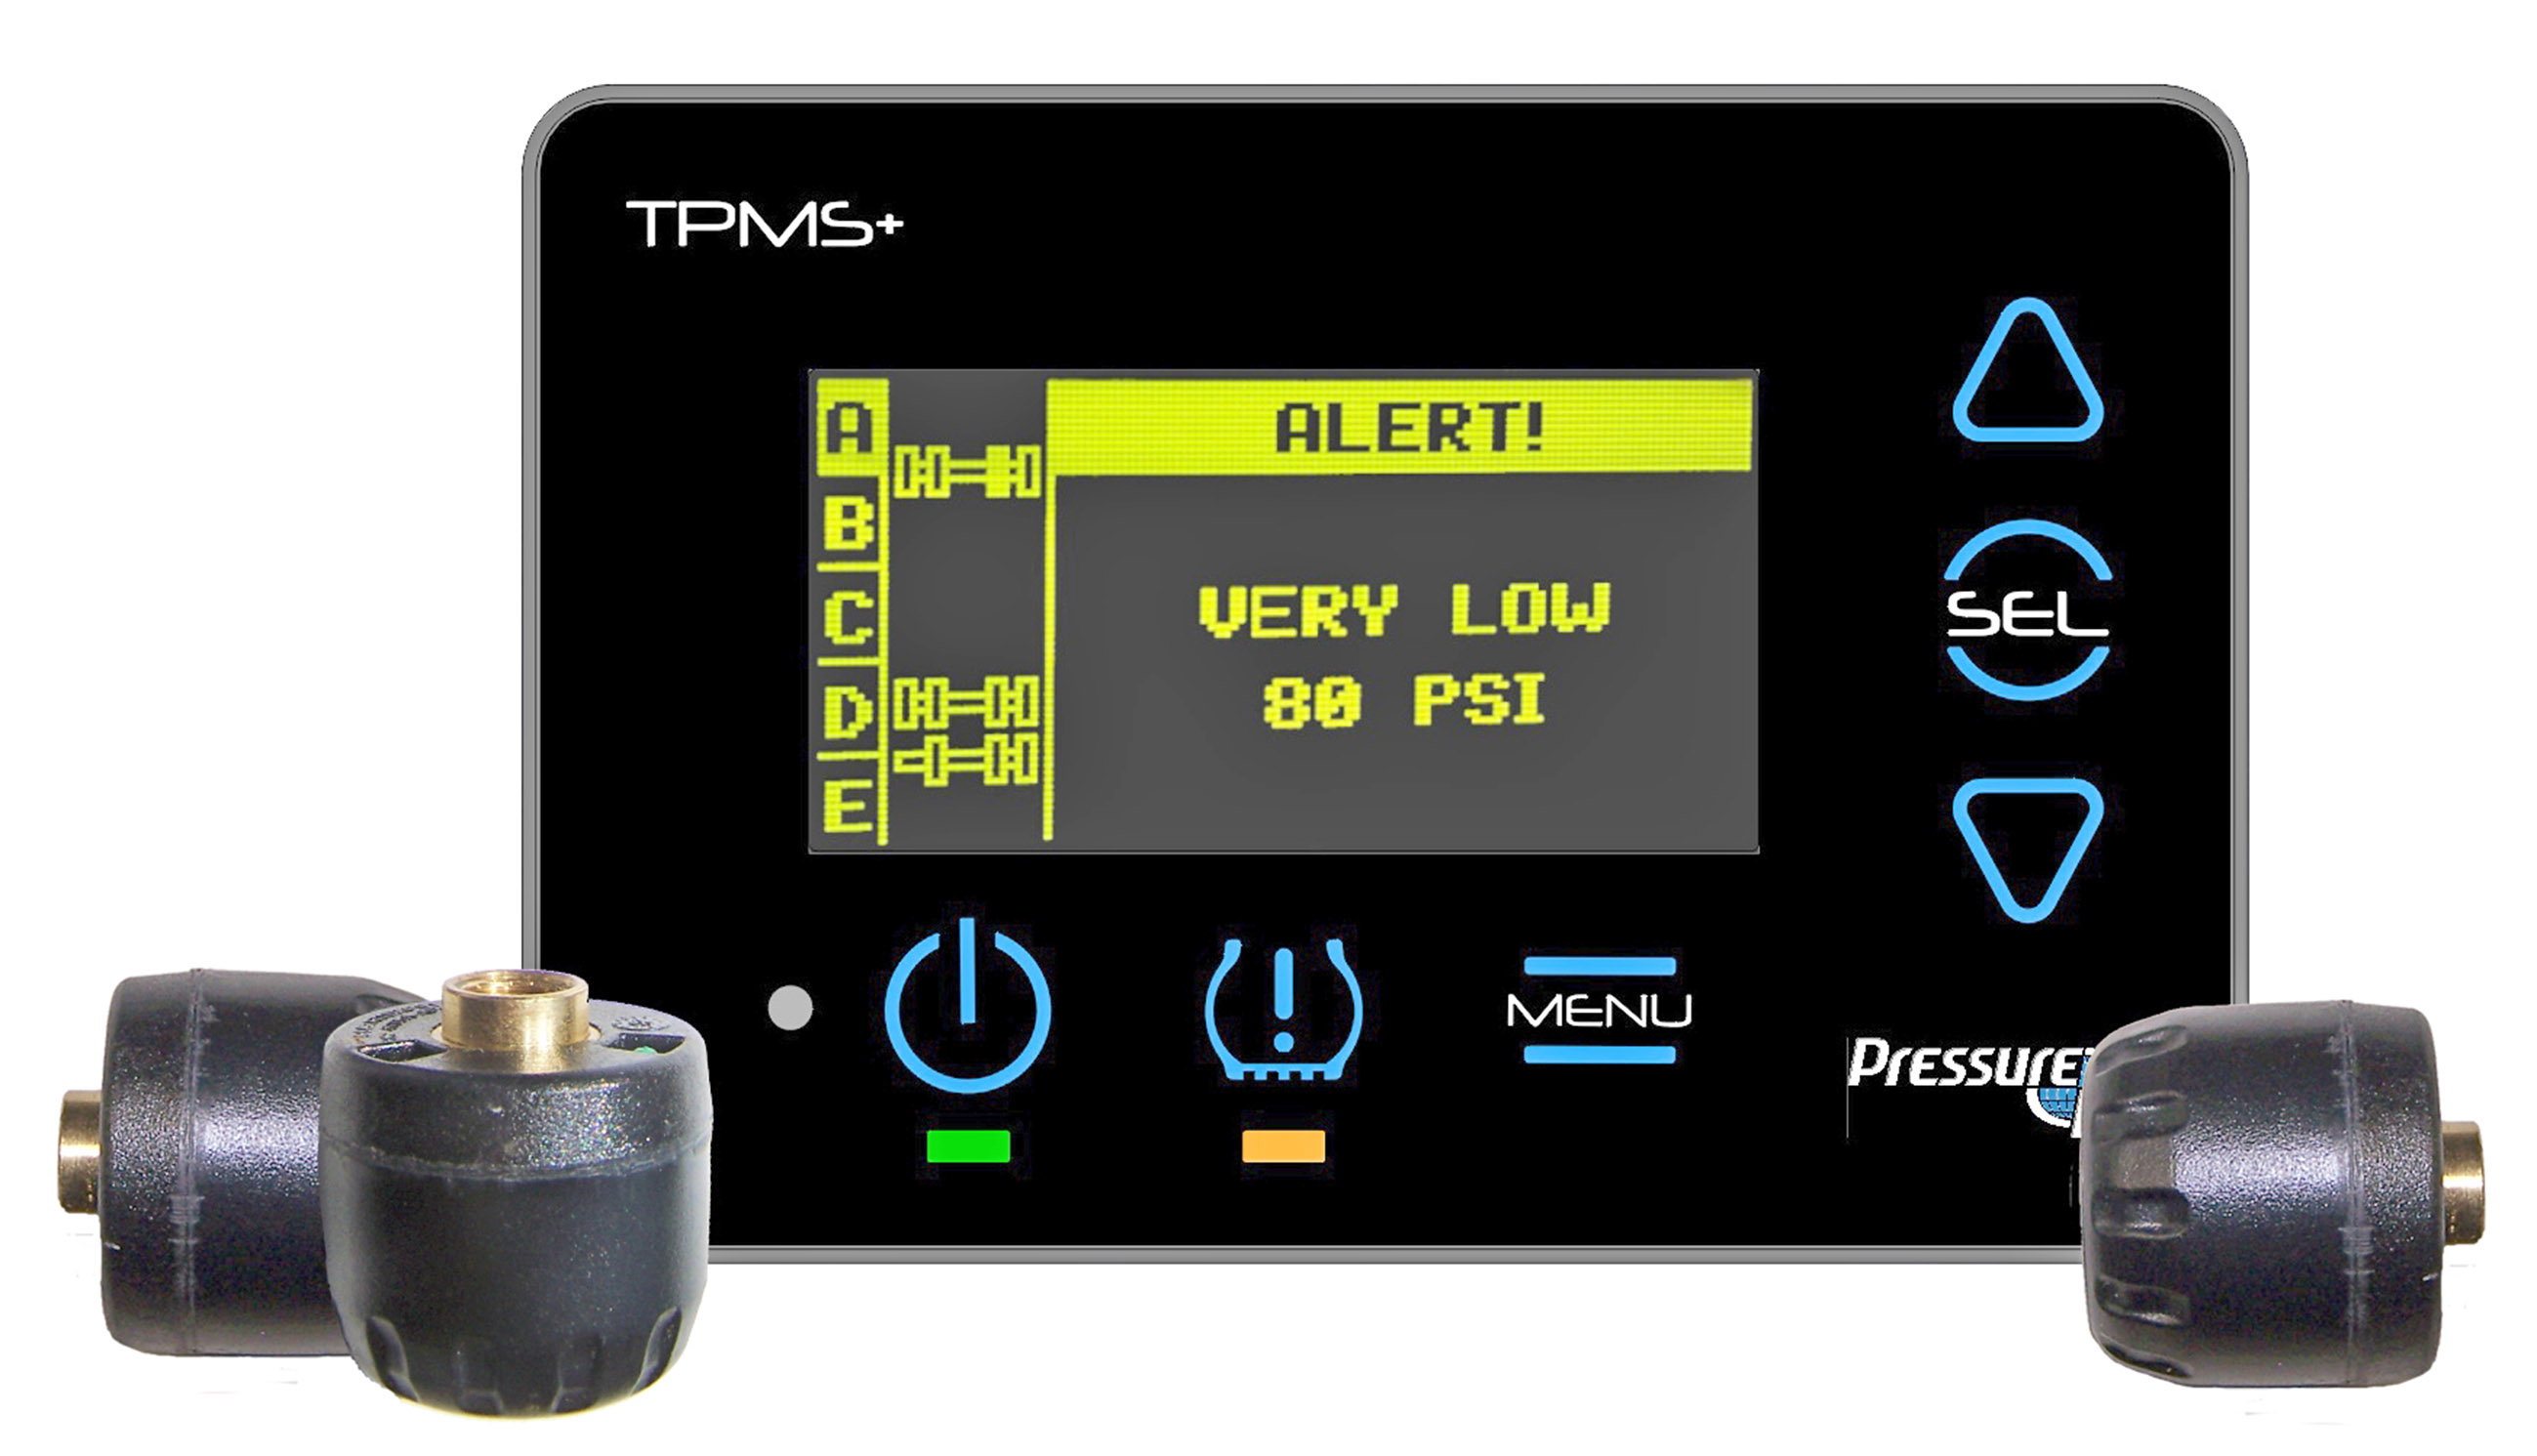 UK debut for PressurePro Pulse TPMS